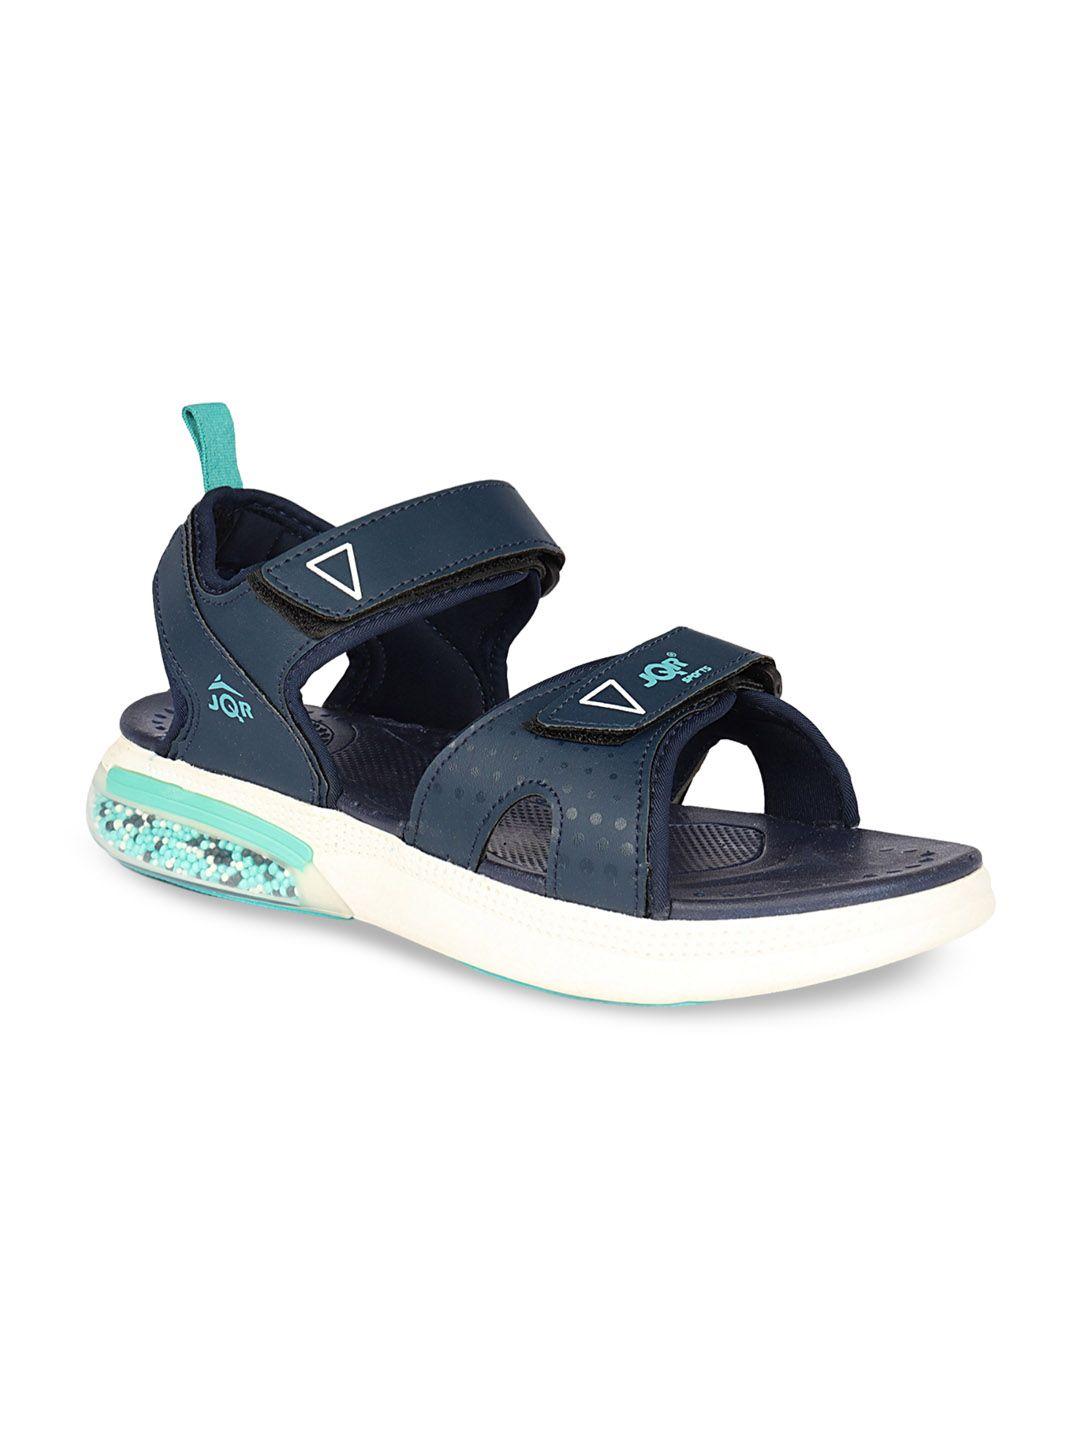 jqr-men-velcro-sports-sandals